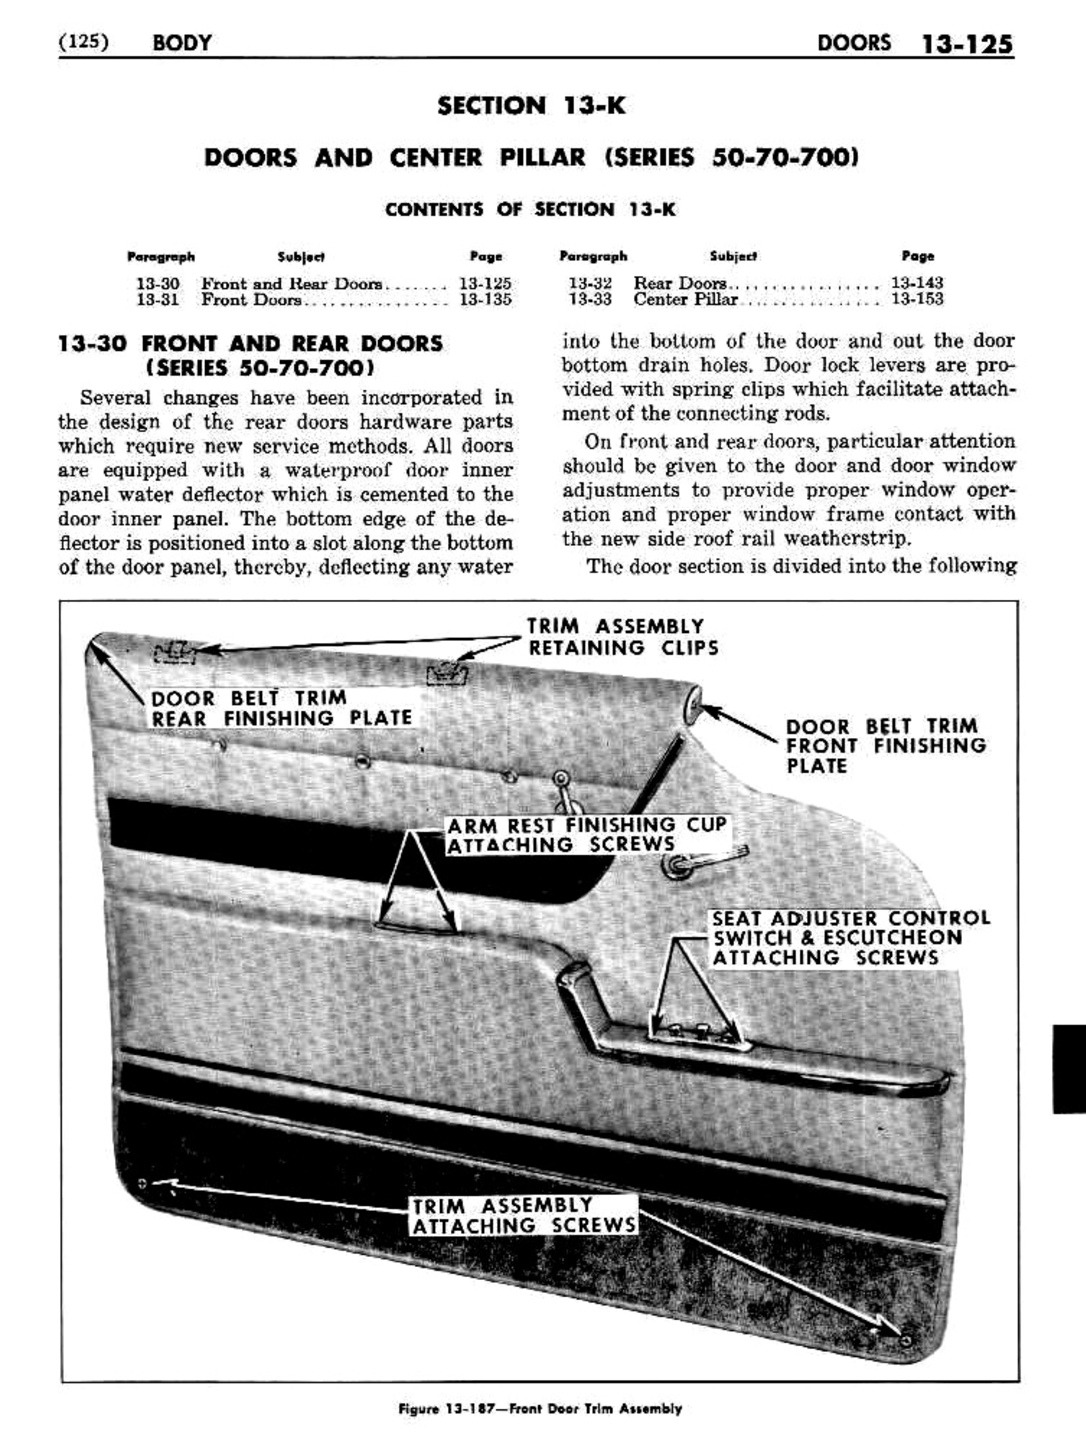 n_1958 Buick Body Service Manual-126-126.jpg